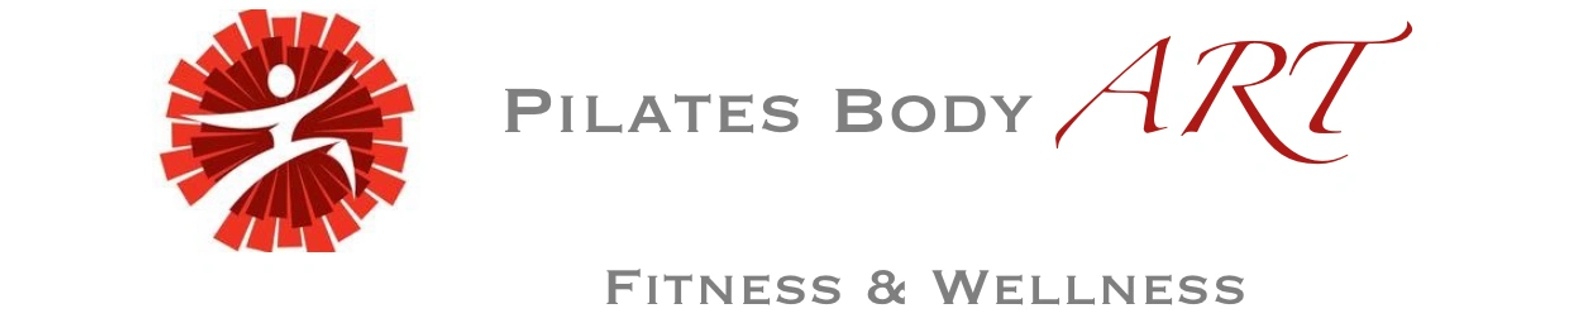 Pilates Body Art Fitness & Wellness, Camarillo 